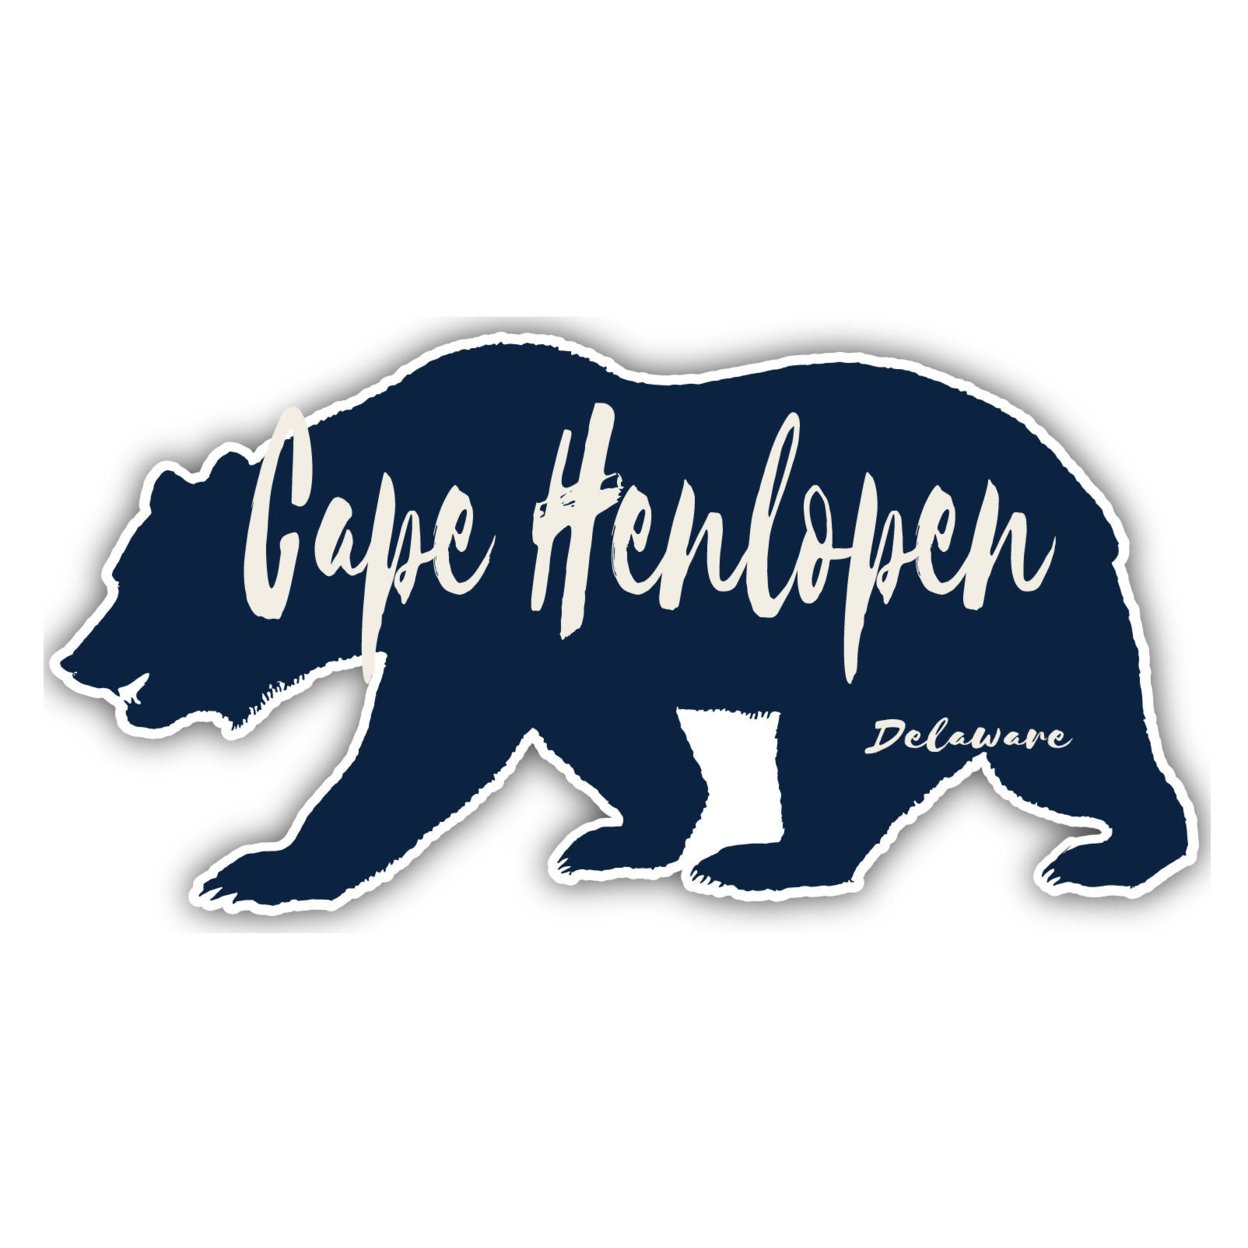 Cape Henlopen Delaware Souvenir Decorative Stickers (Choose Theme And Size) - 4-Pack, 12-Inch, Bear